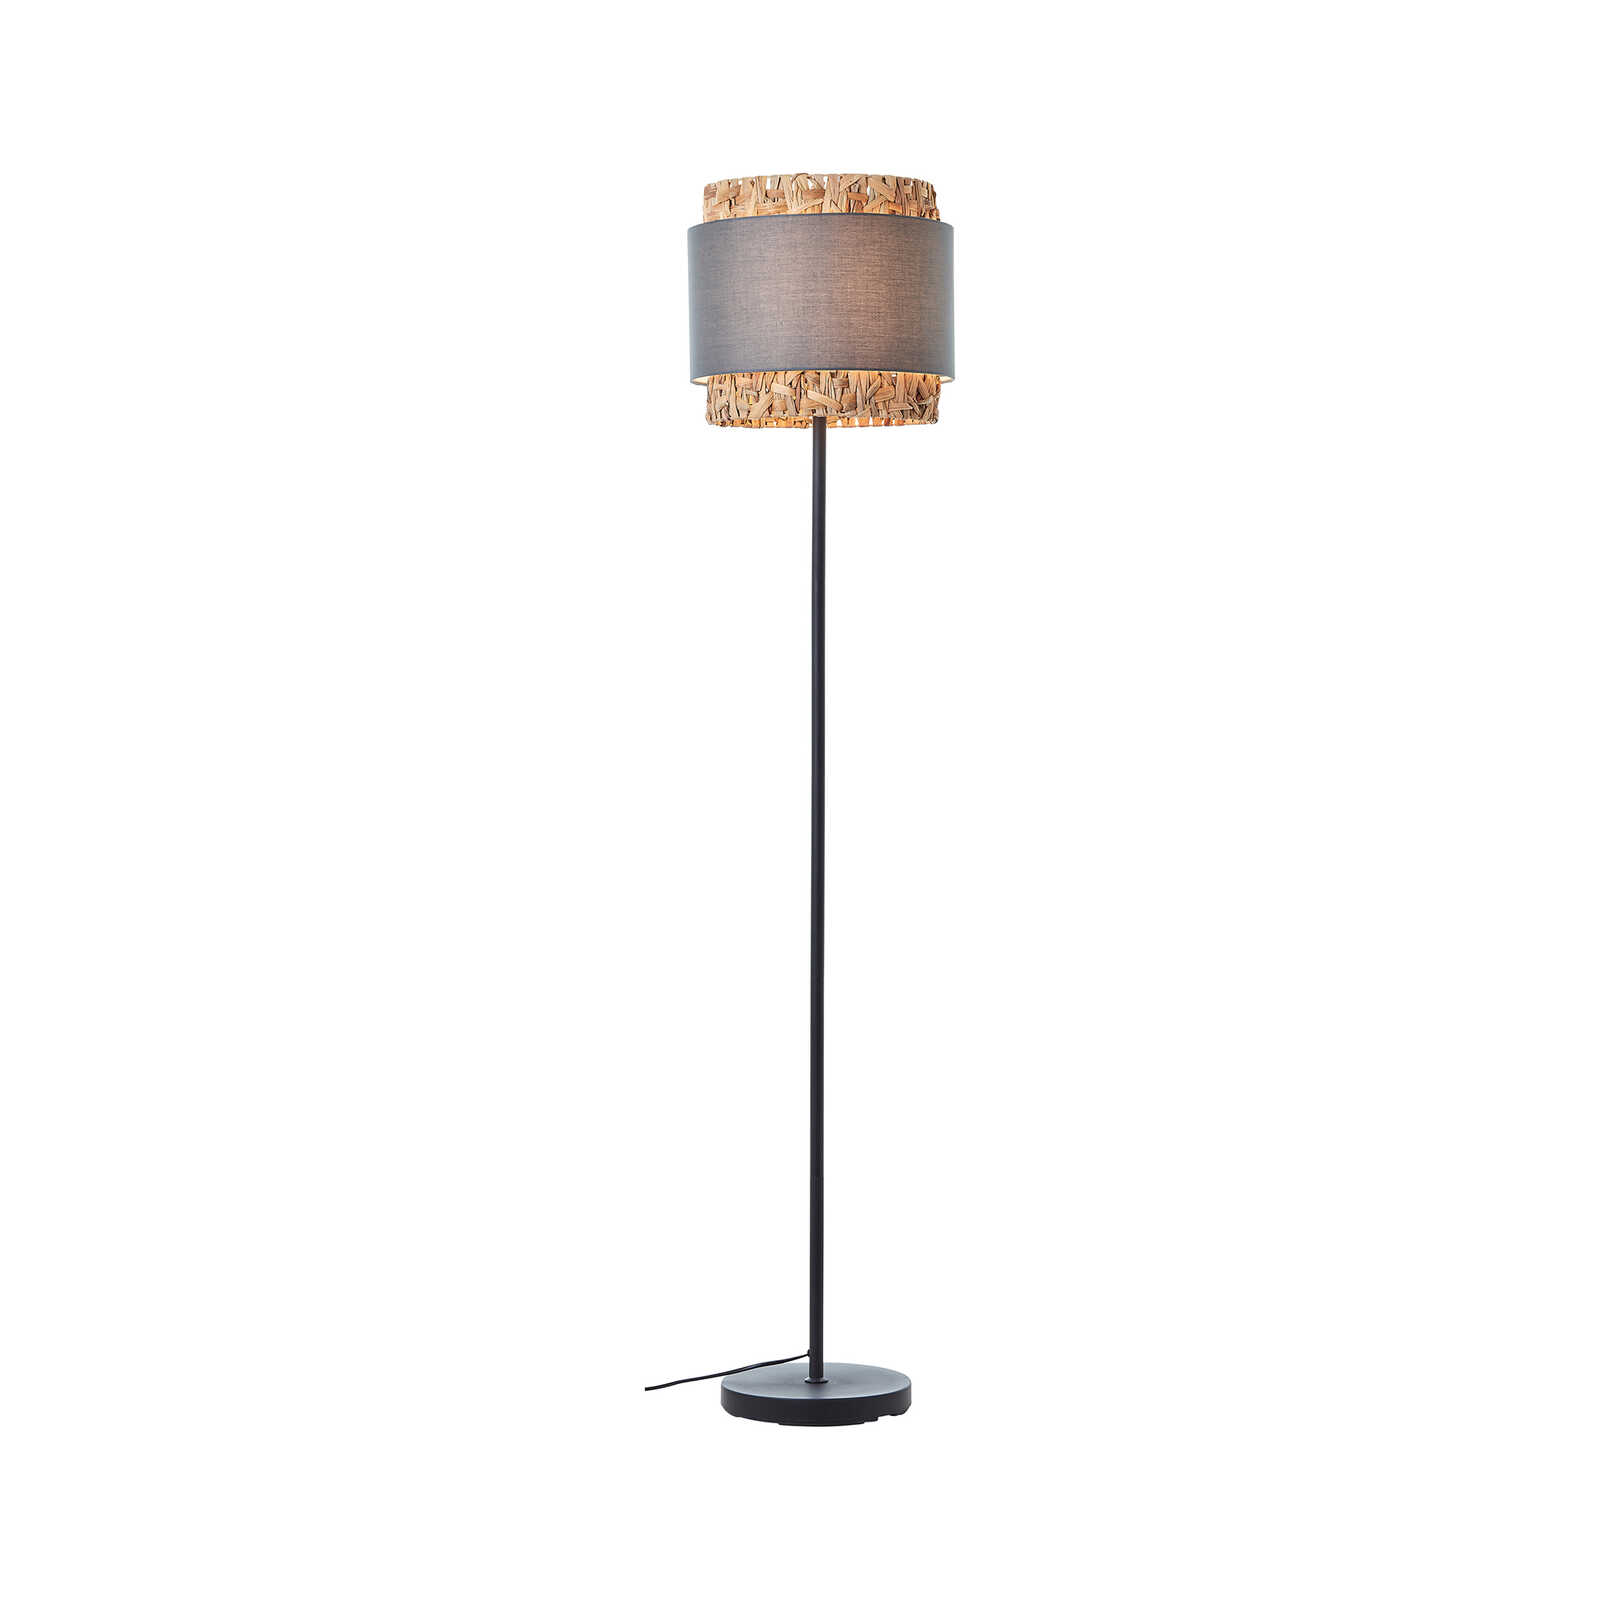 Floor lamp made of textile - Till 8 - Beige
